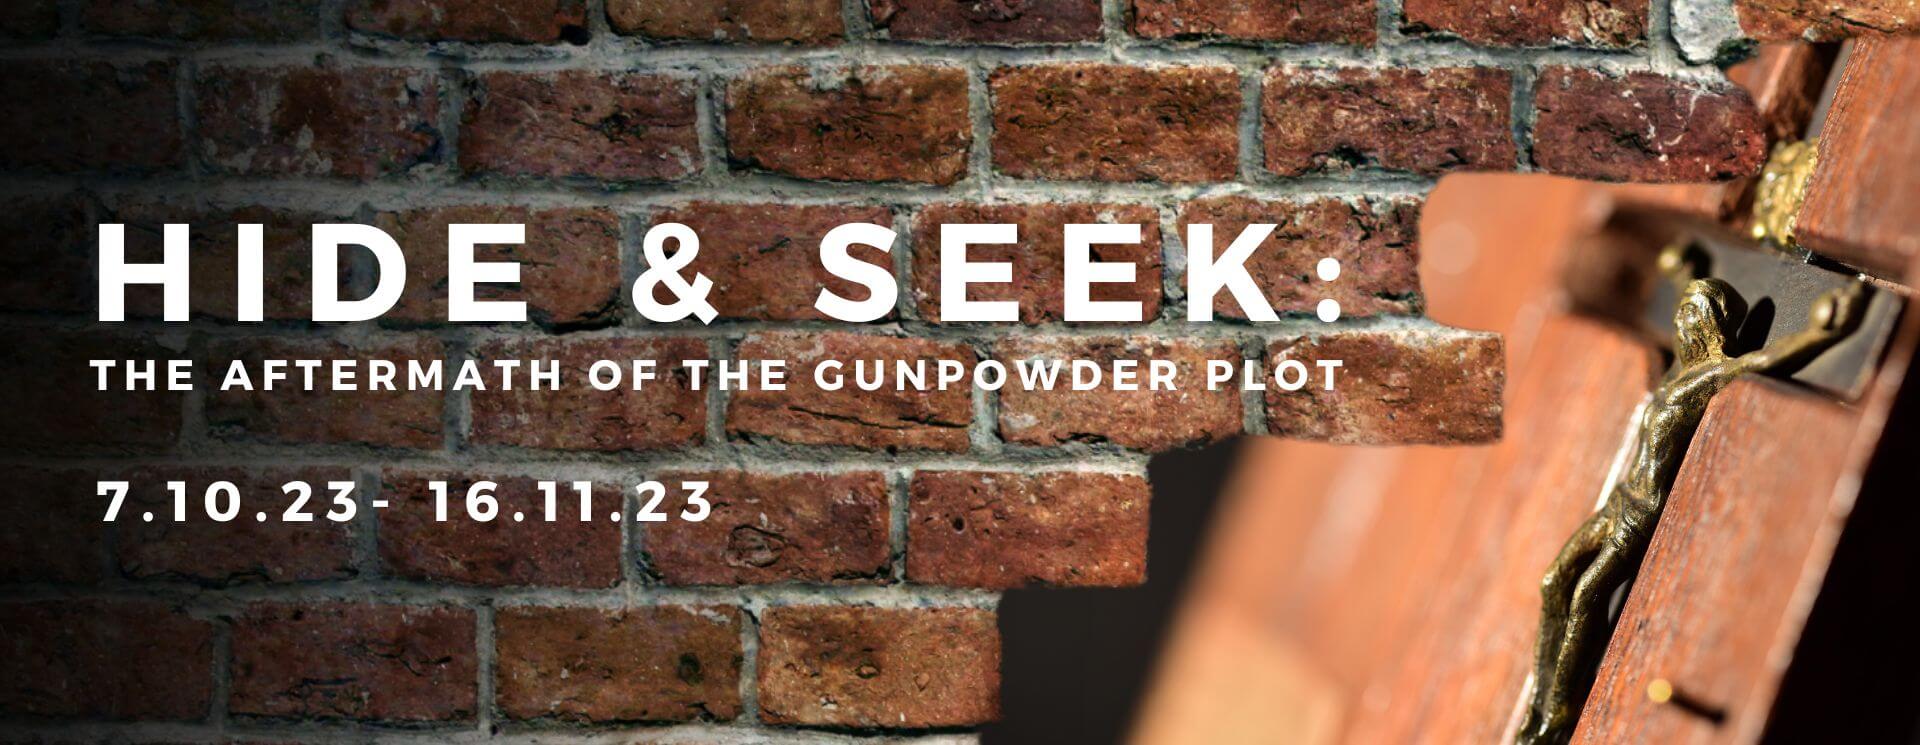 Hide & Seek: The Aftermath of the Gunpowder Plot